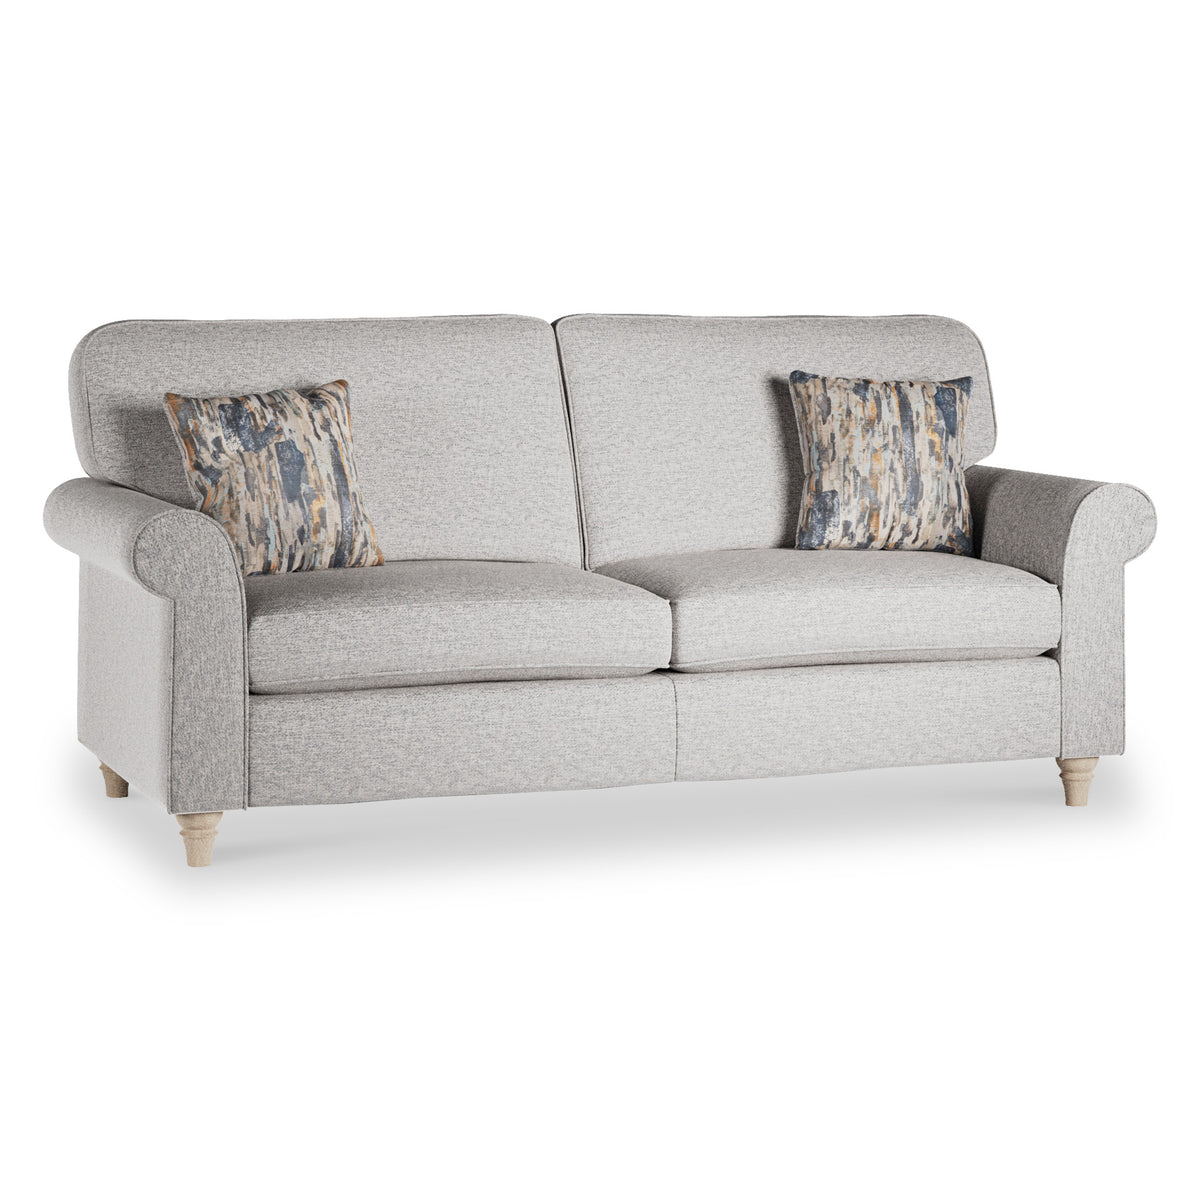 Jude Zinc 3 Seater Sofa from Roseland Furniture